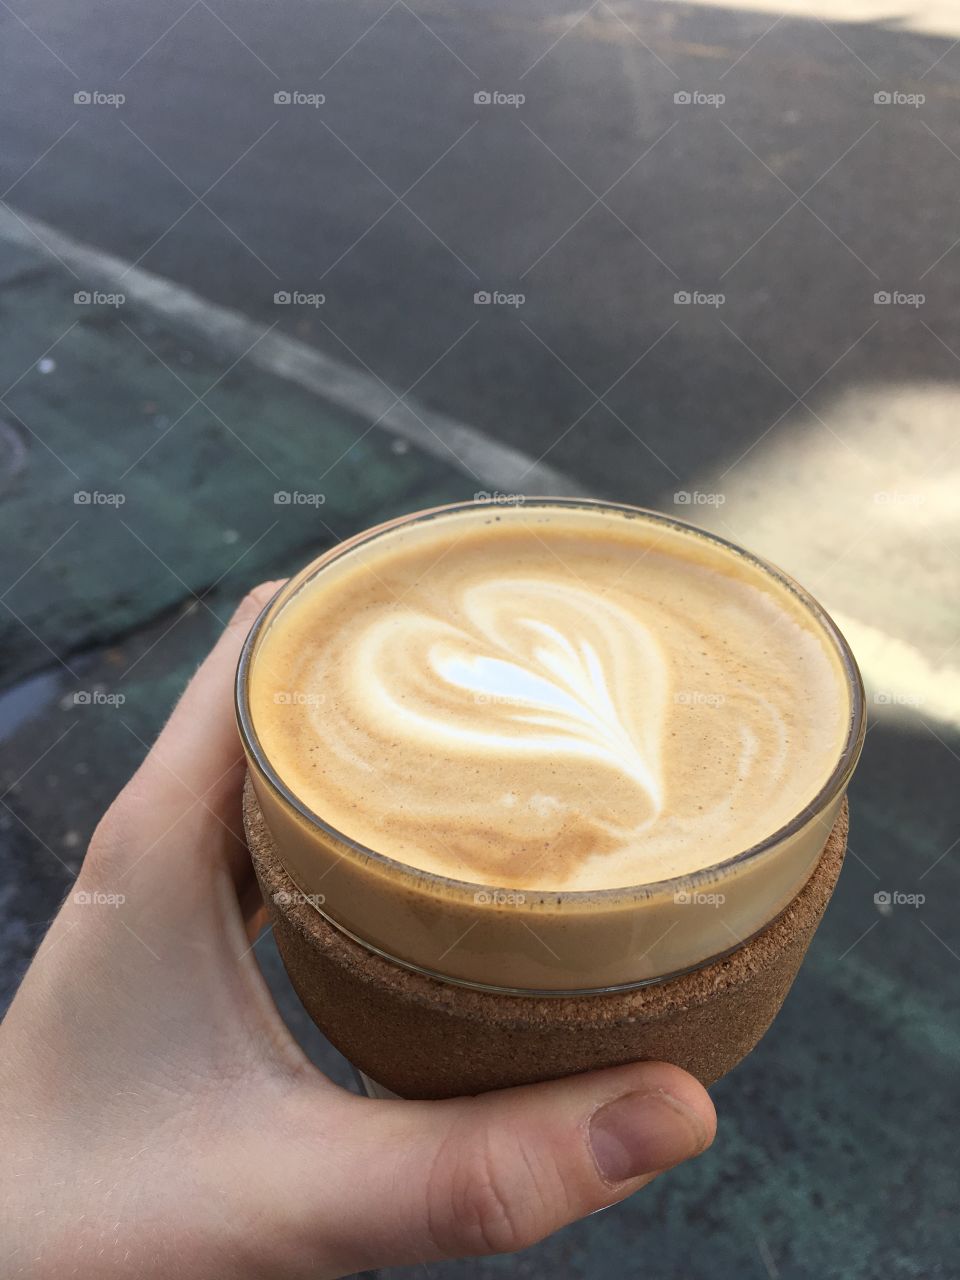 Coffee is a hug in the mug